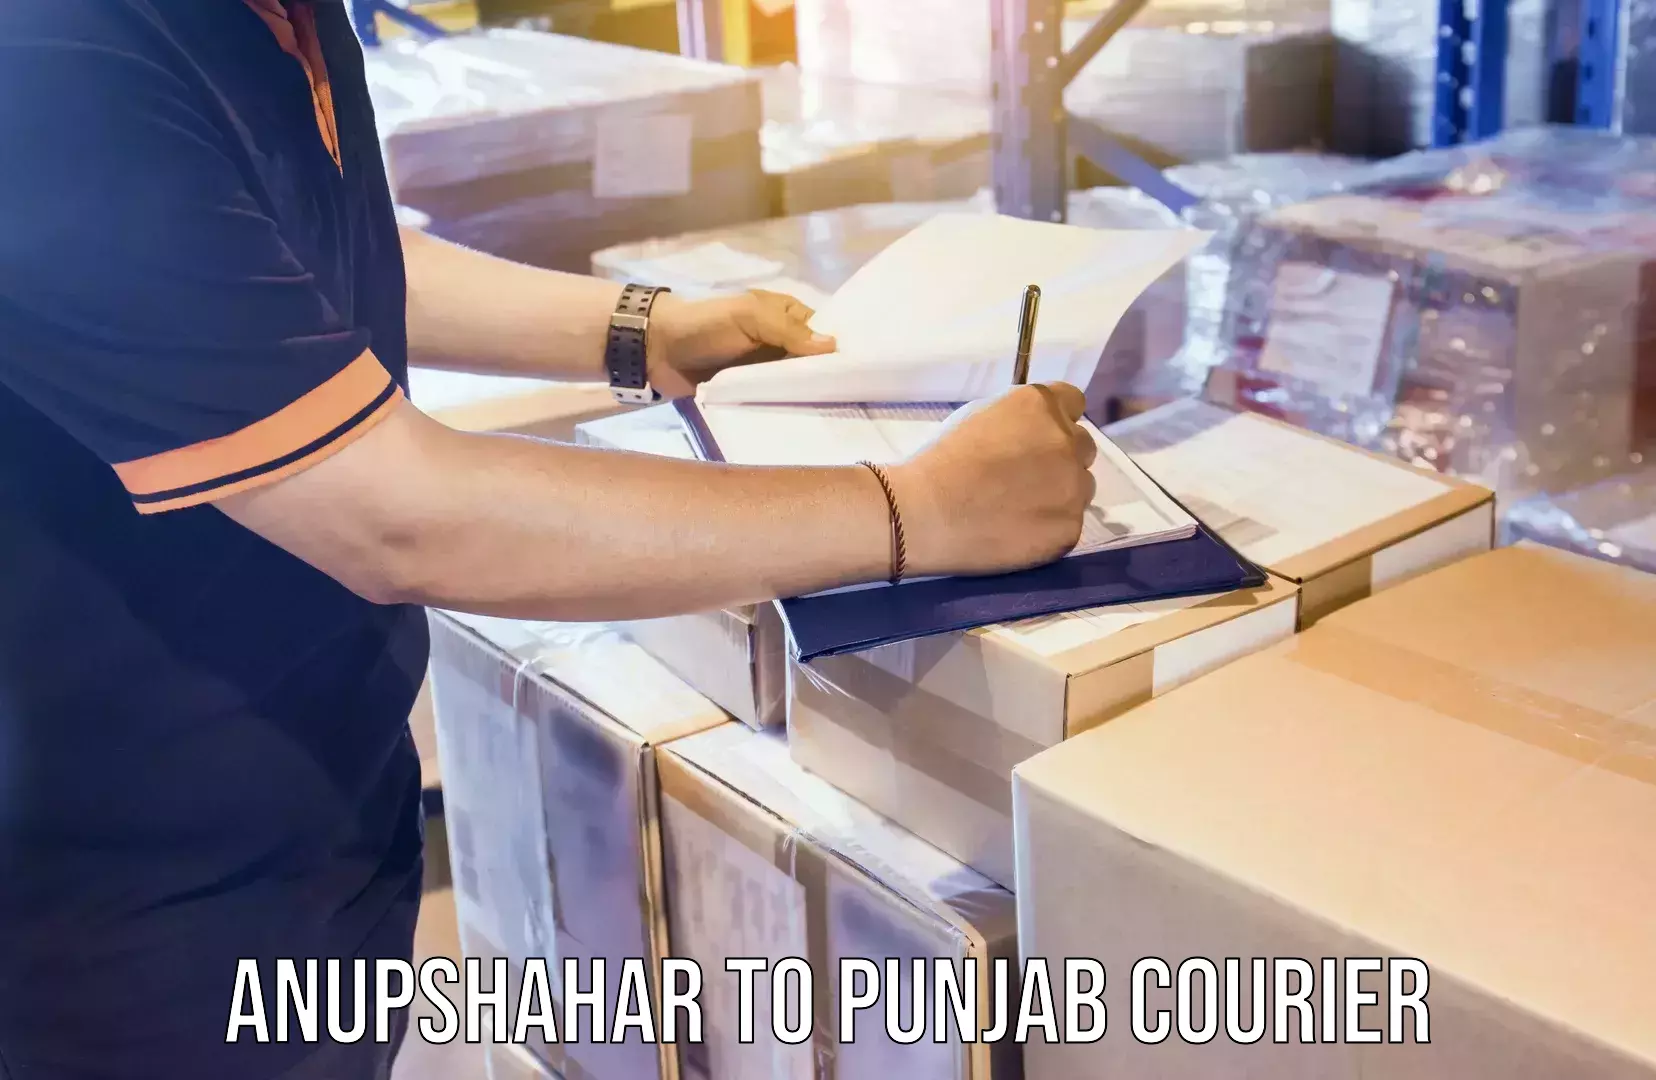 Courier service partnerships Anupshahar to Punjab